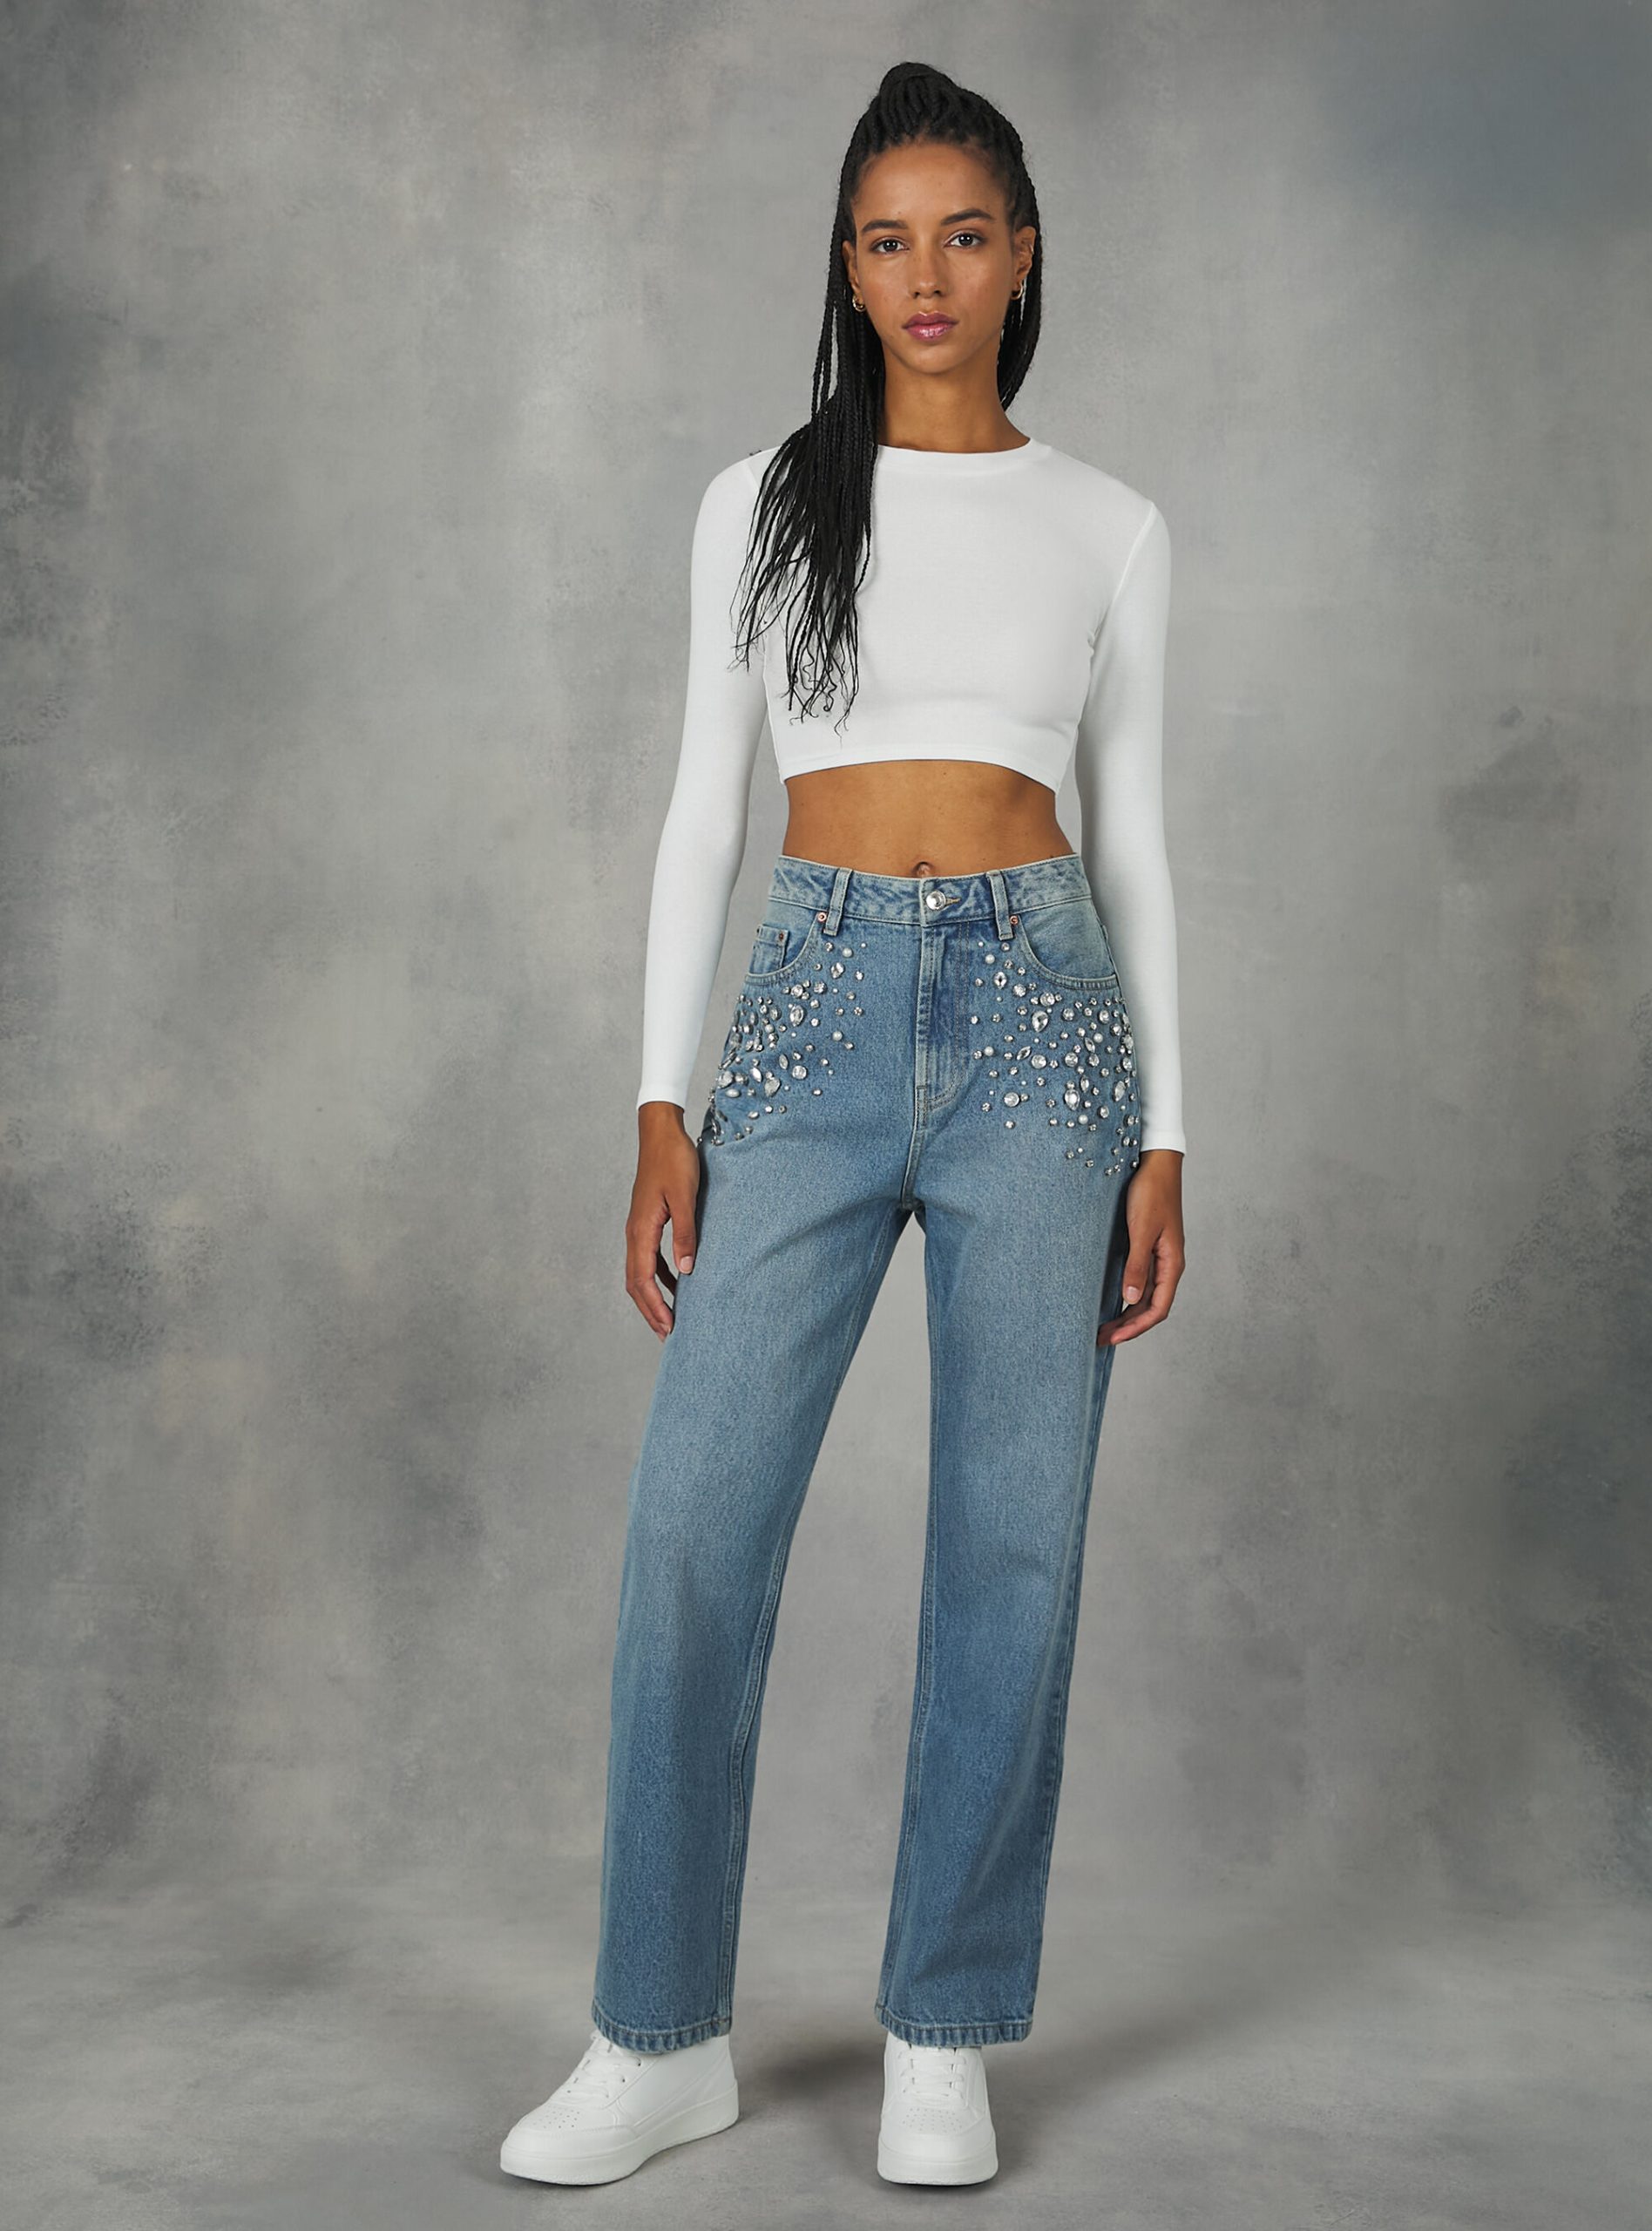 D006 Azure Frauen Night Out Straight Fit Jeans With Rhinestones Alcott Sonderangebot – 1